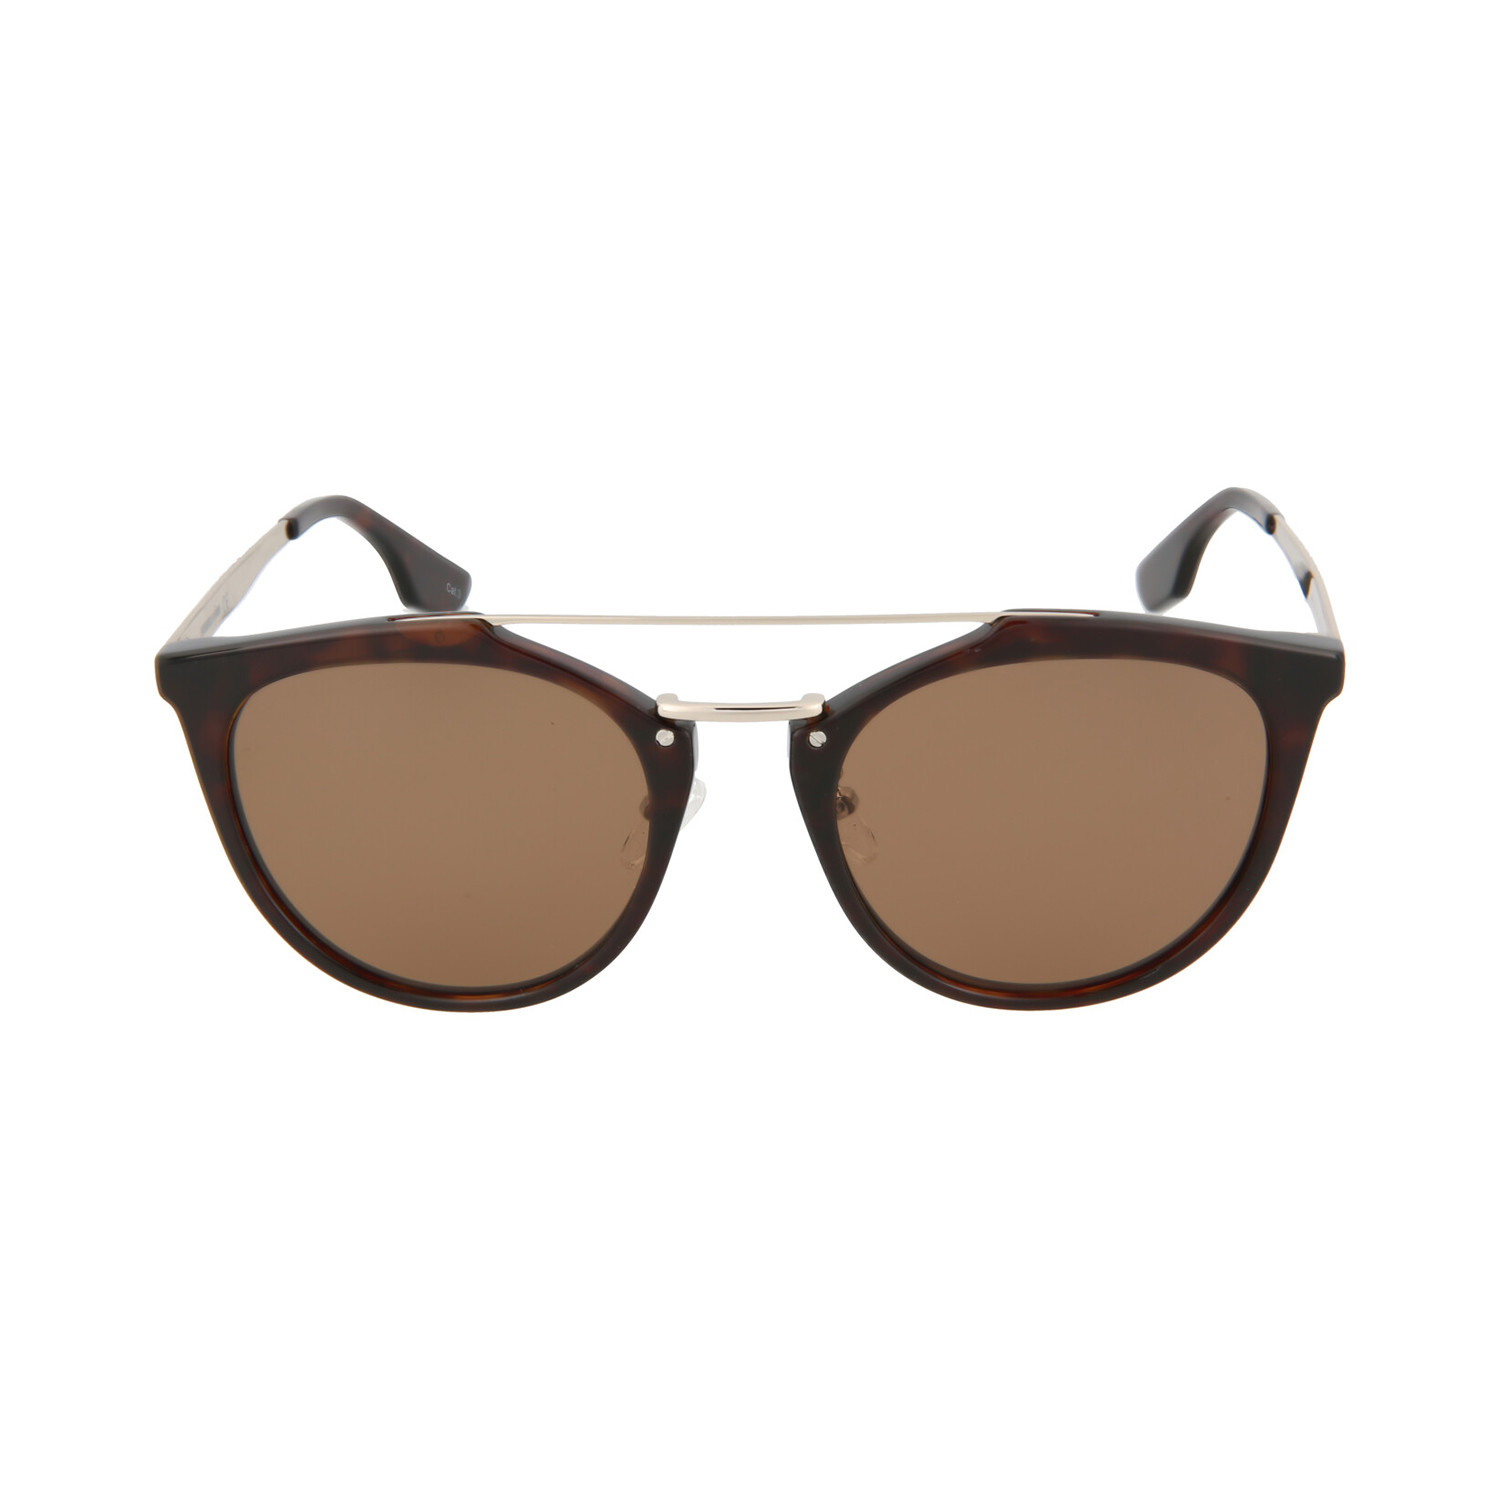 Unisex Mq0037s Round Sunglasses Havana Gold Madaluxe Eyewear Llc Permanent Store Touch